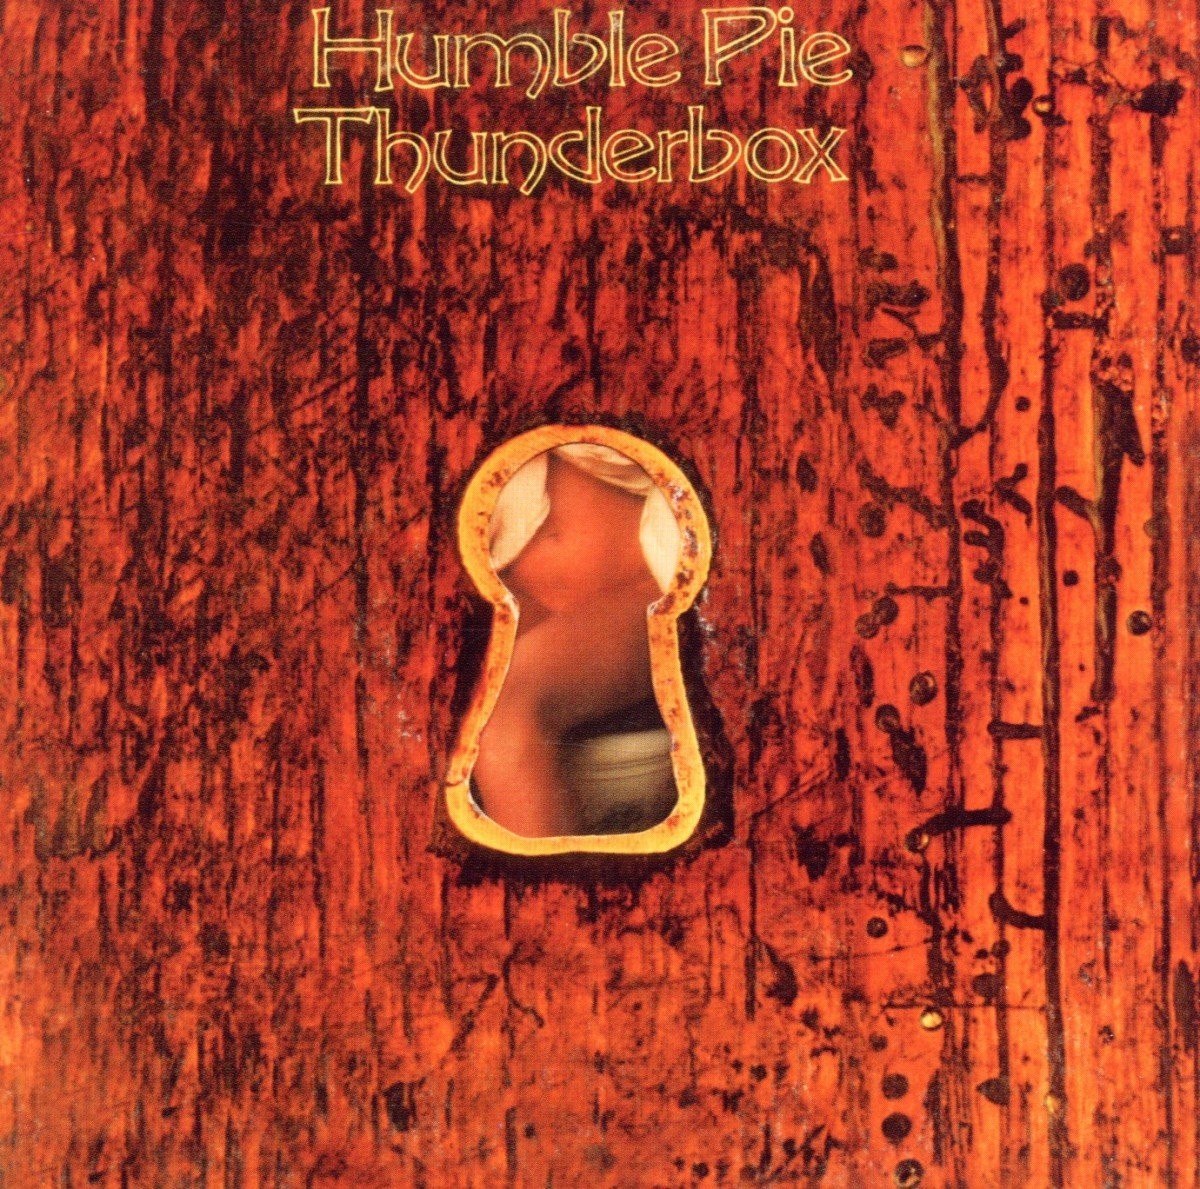 Humble Pie - Thunderbox (Edie 2012)